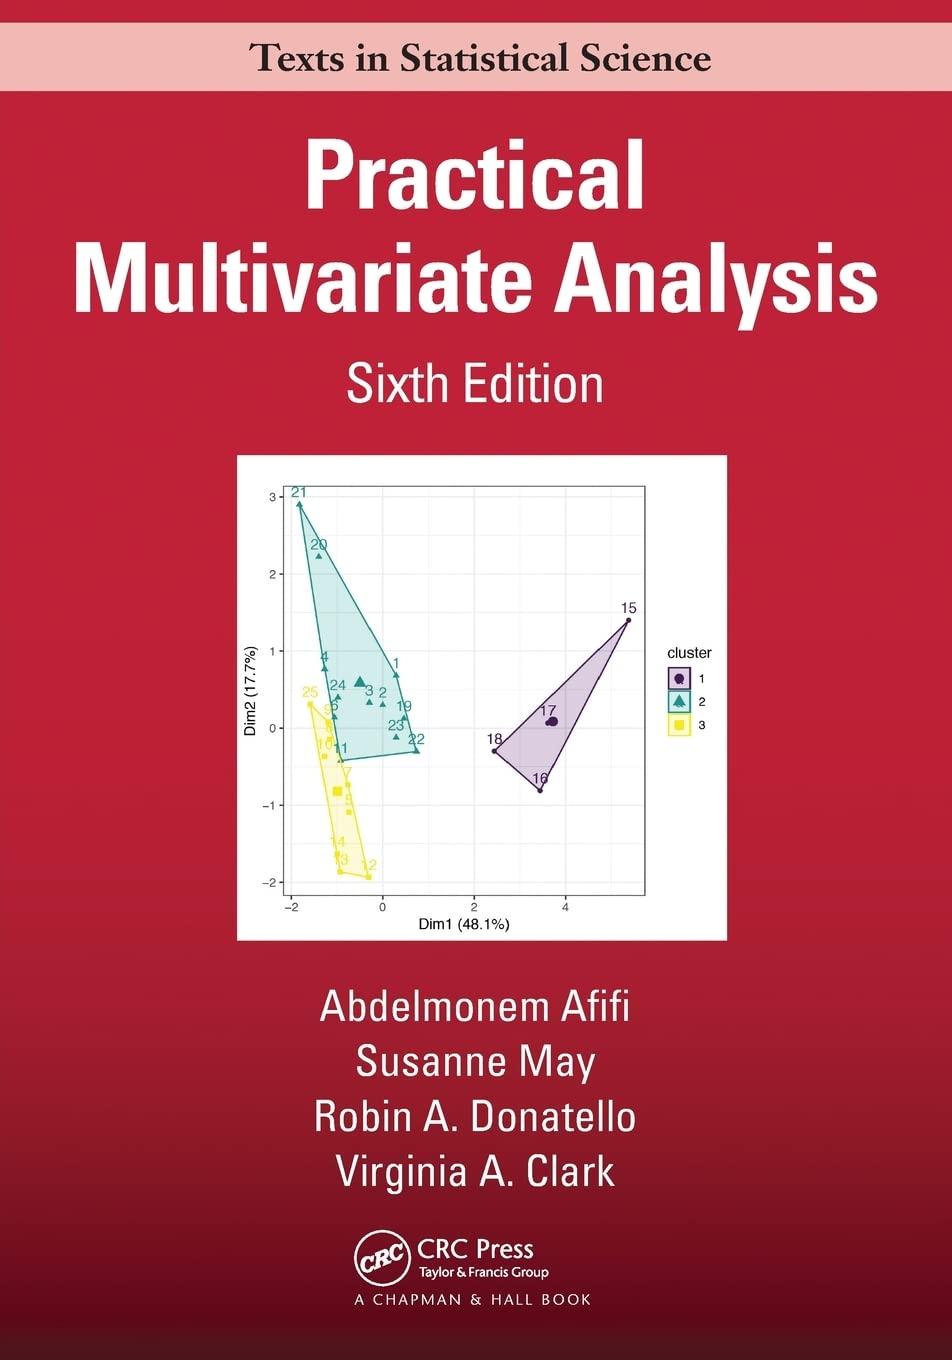 practical multivariate analysis 6th edition abdelmonem afifi, susanne may, virginia a. clark, robin donatello